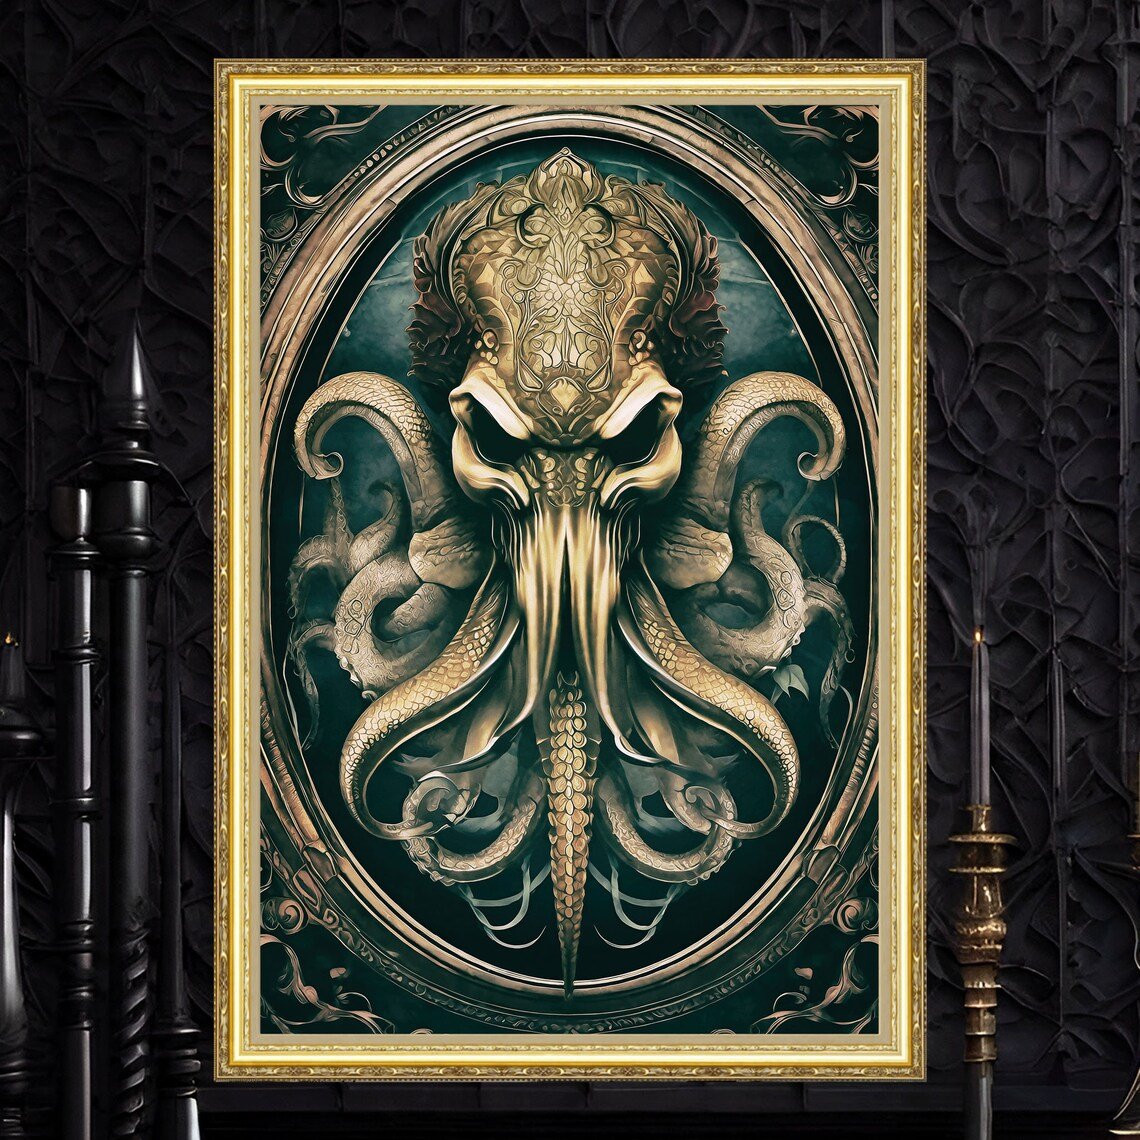 Dark Art Splendor: Lovecraftian Cthulhu Poster for Home Decor, Dark Academia Gift, Art Prints 
bohemyartstudio.etsy.com/listing/154720…
#DarkDesigns #GothicInspiration #SurrealArtPrints #GiftIdeas #artcollectors